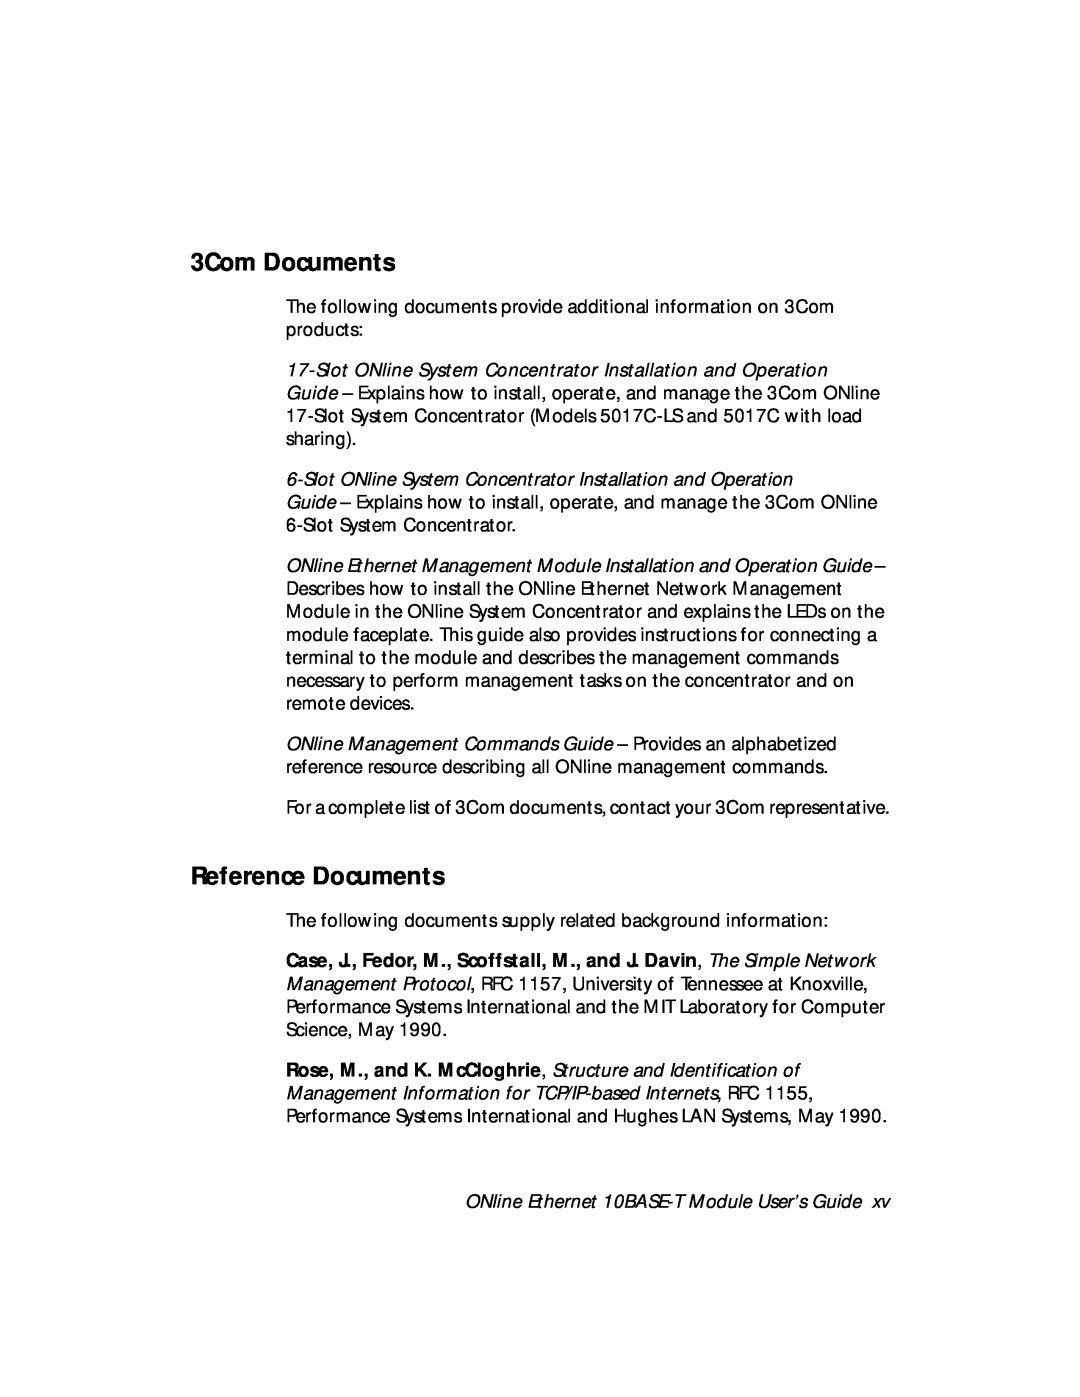 3Com 5108M-TP manual 3Com Documents, Reference Documents 